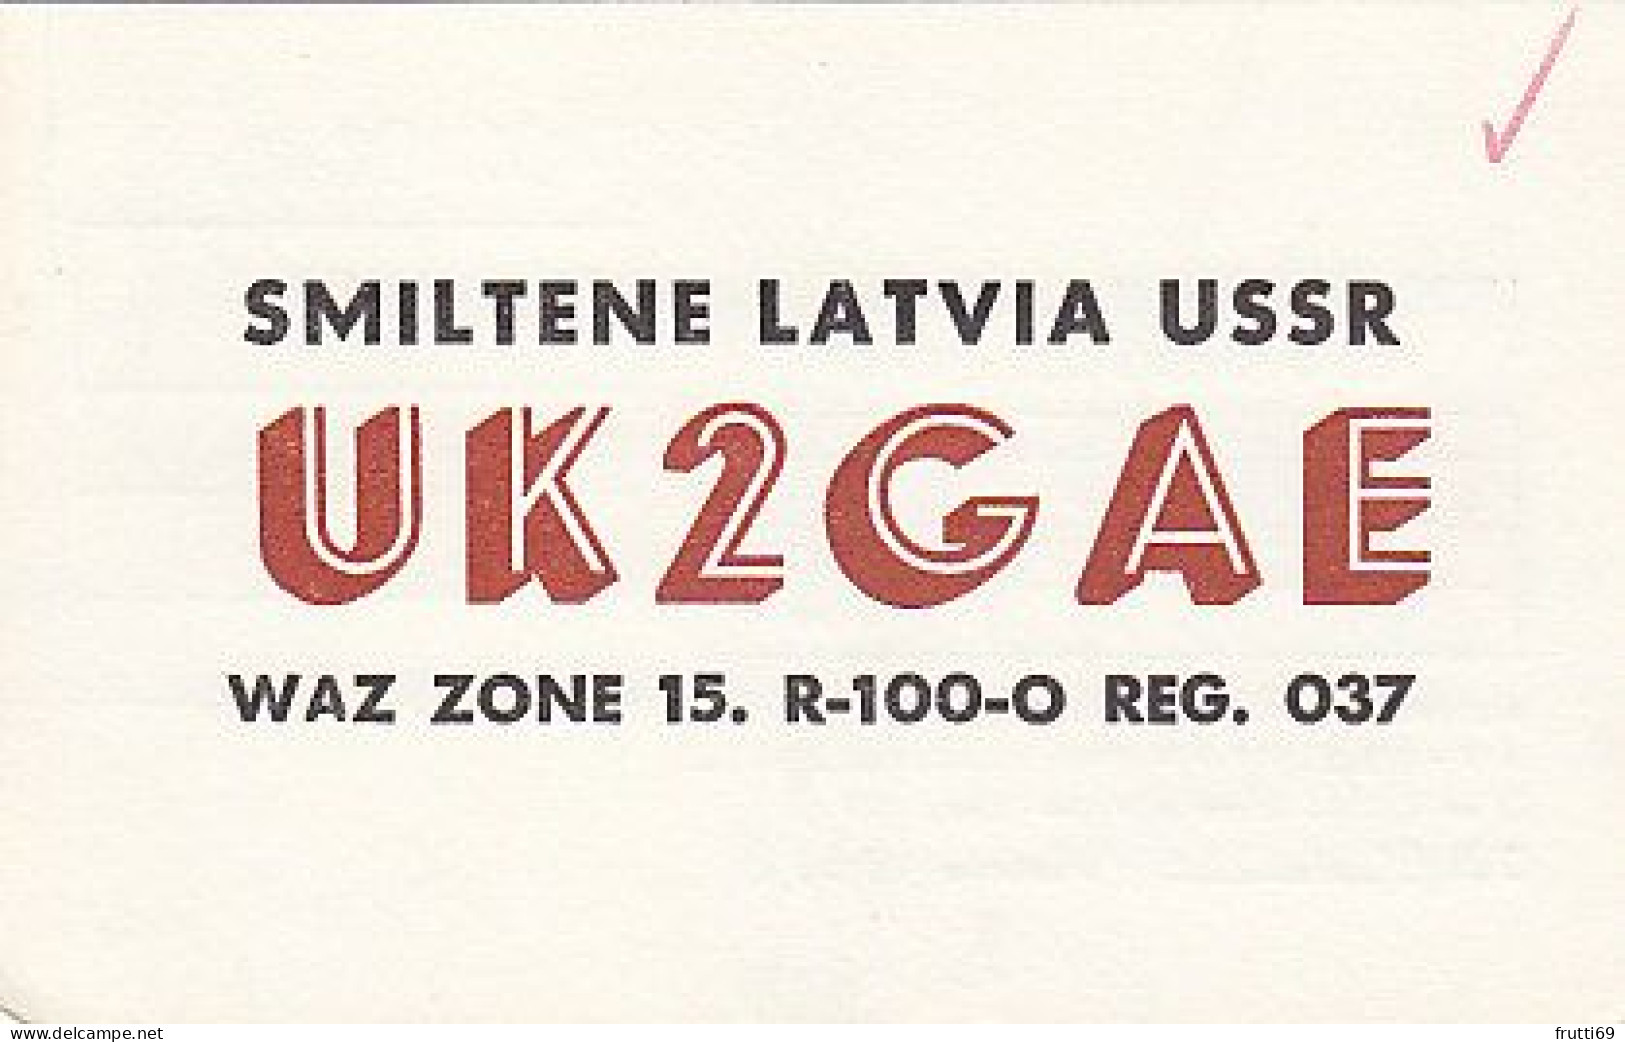 AK 210435 QSL - USSR - Latvia - Smiltene - Radio Amateur